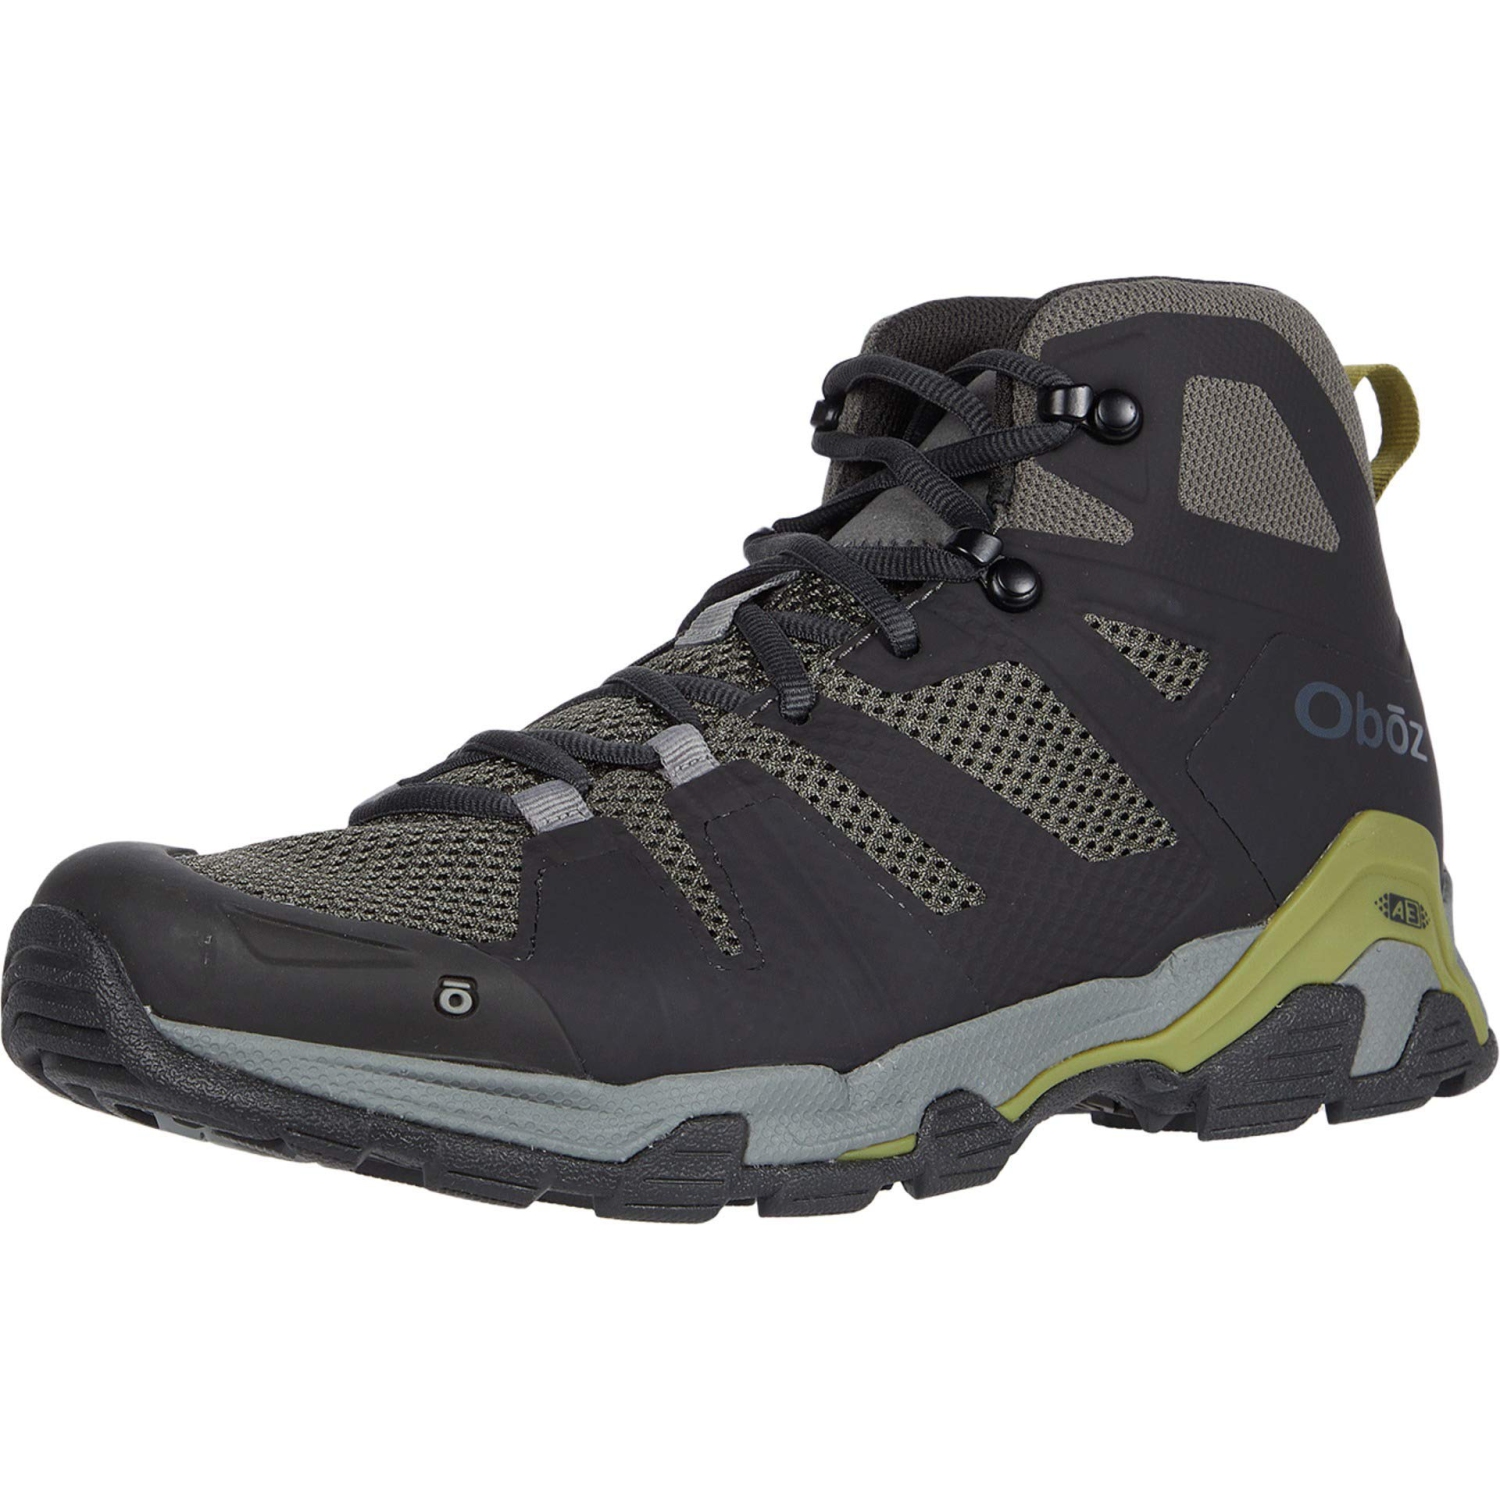 Oboz Arete Mid Hiking Boot - Men's Charcoal/Woodbine Green 9.5